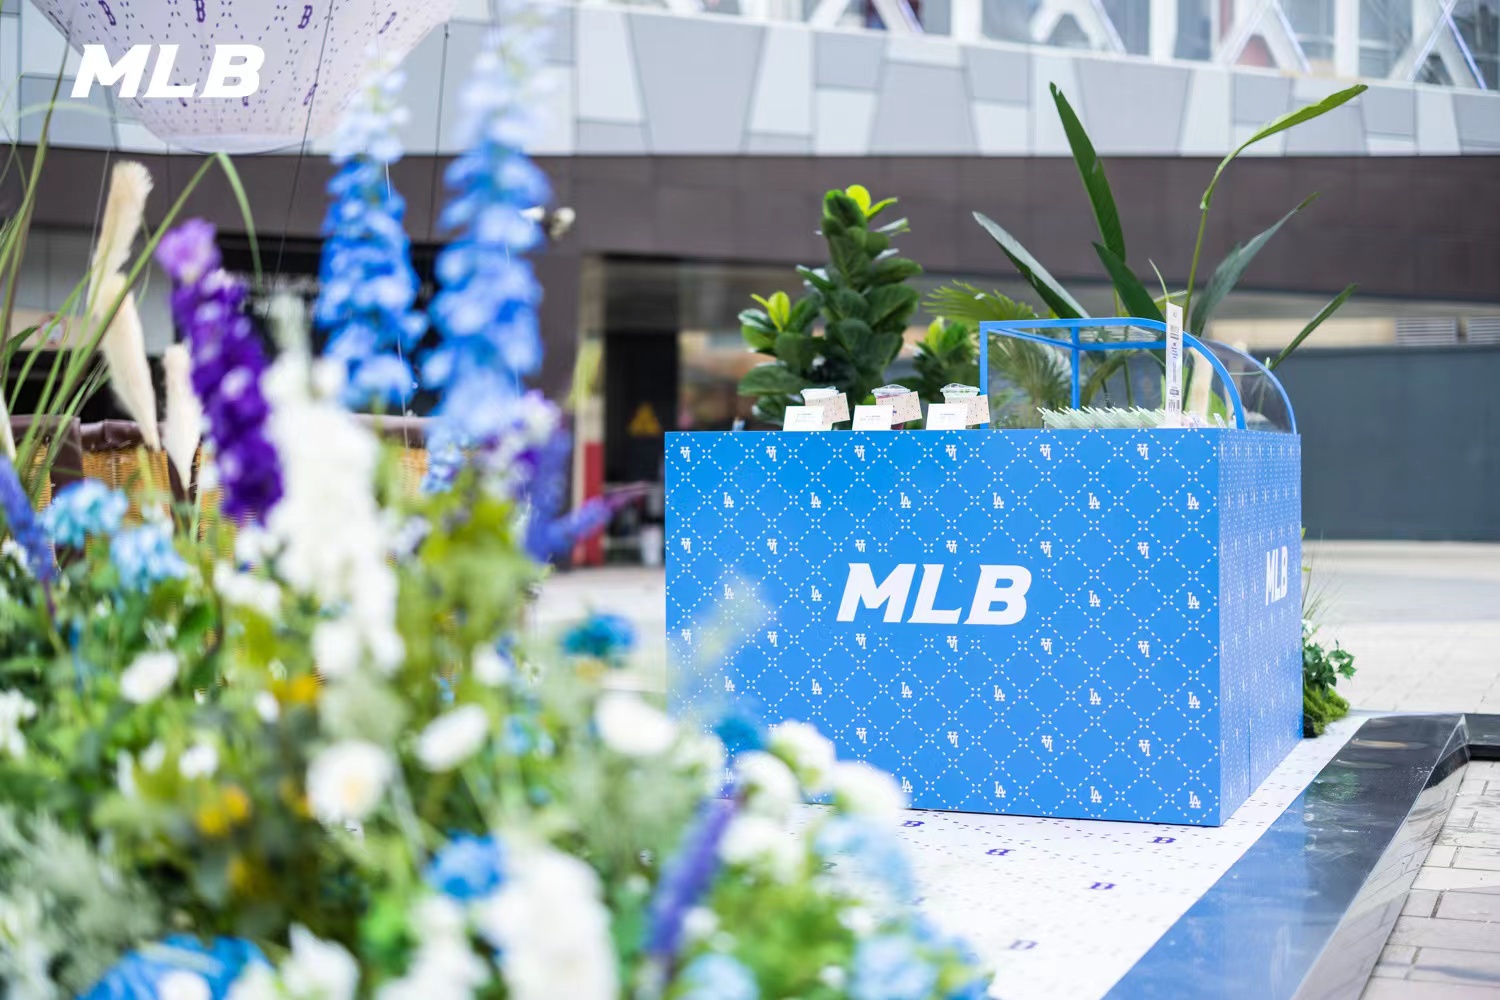 MLB品牌MONOLAND老花漫境沉浸展启幕 首站登陆上海，探抵潮奢新境